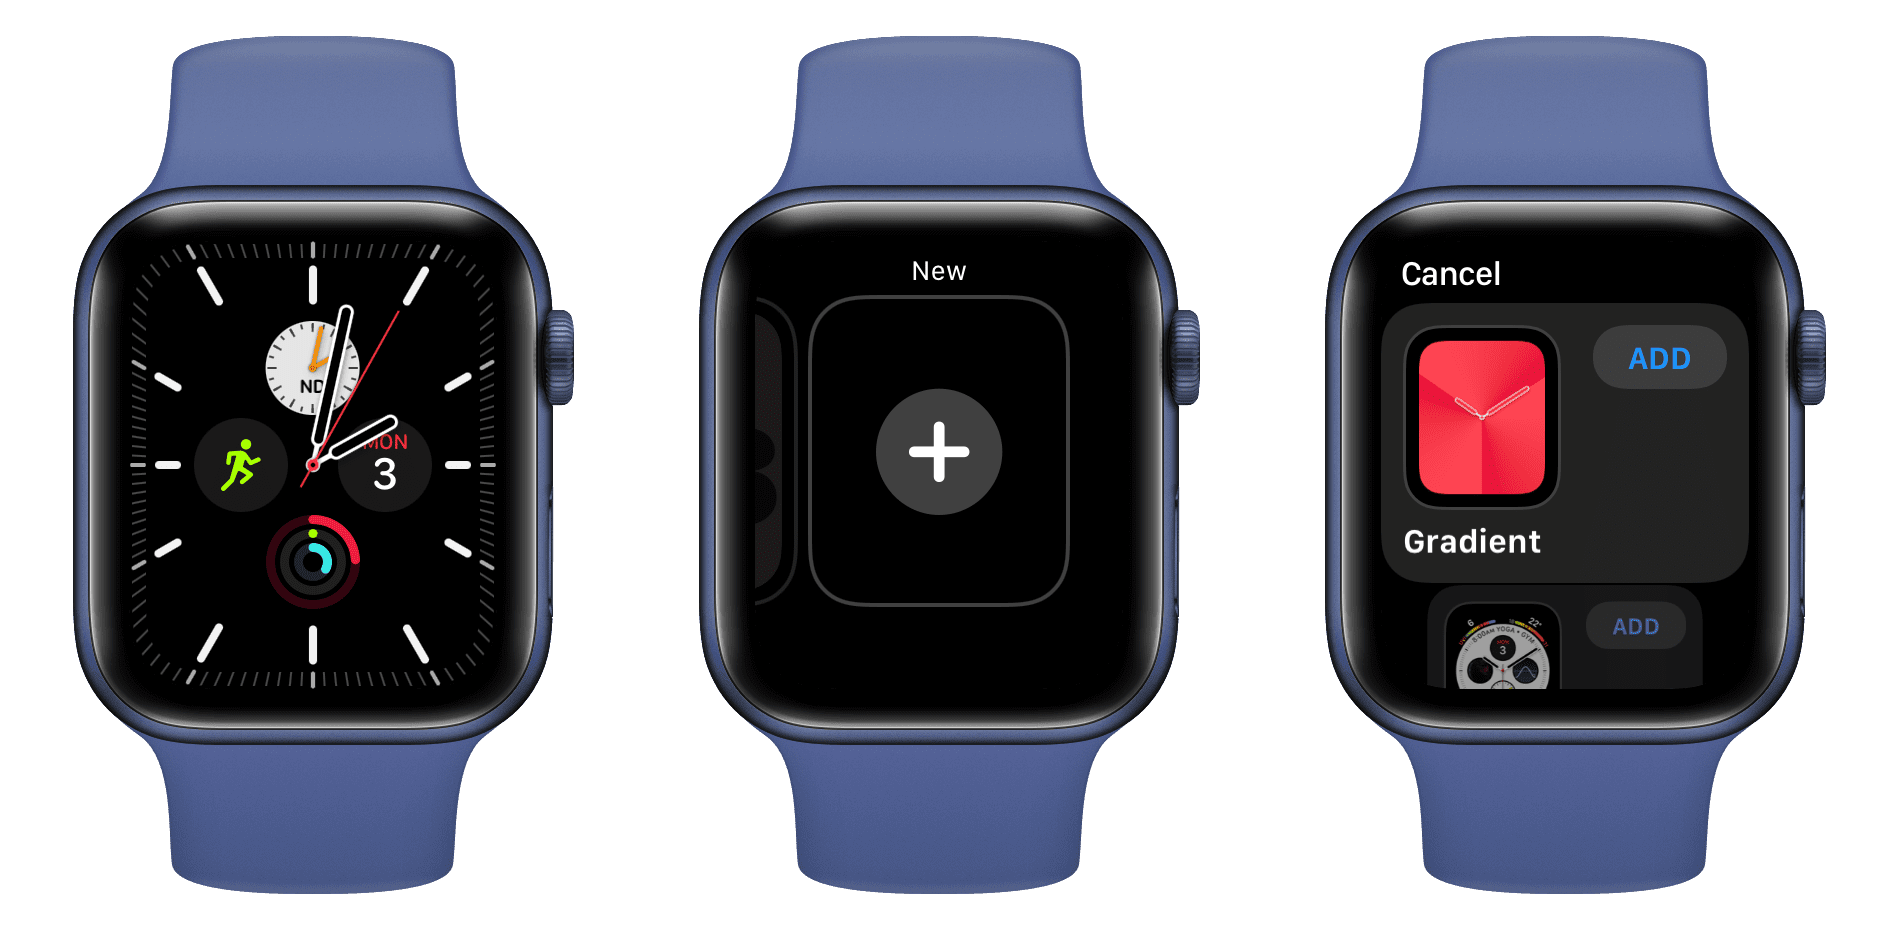 Add new watch face on Apple Watch